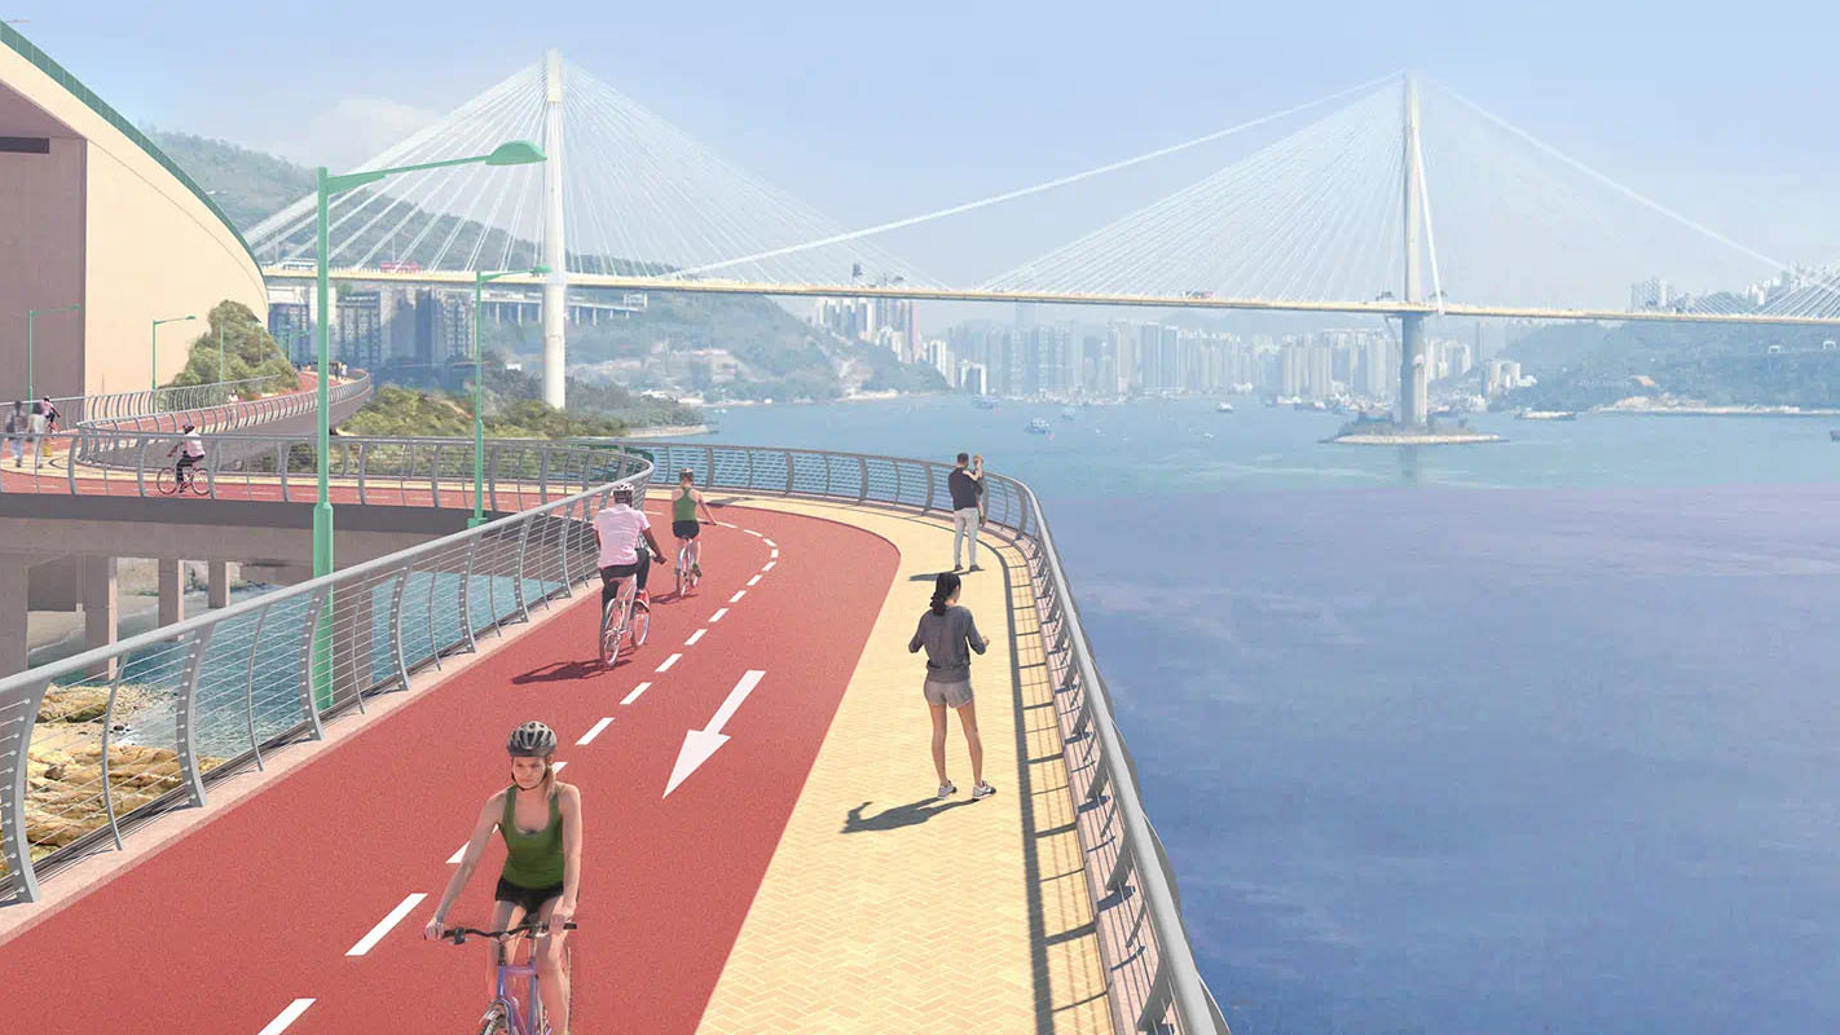 Cycle track between Tsuen Wan and Tuen Mun illustration